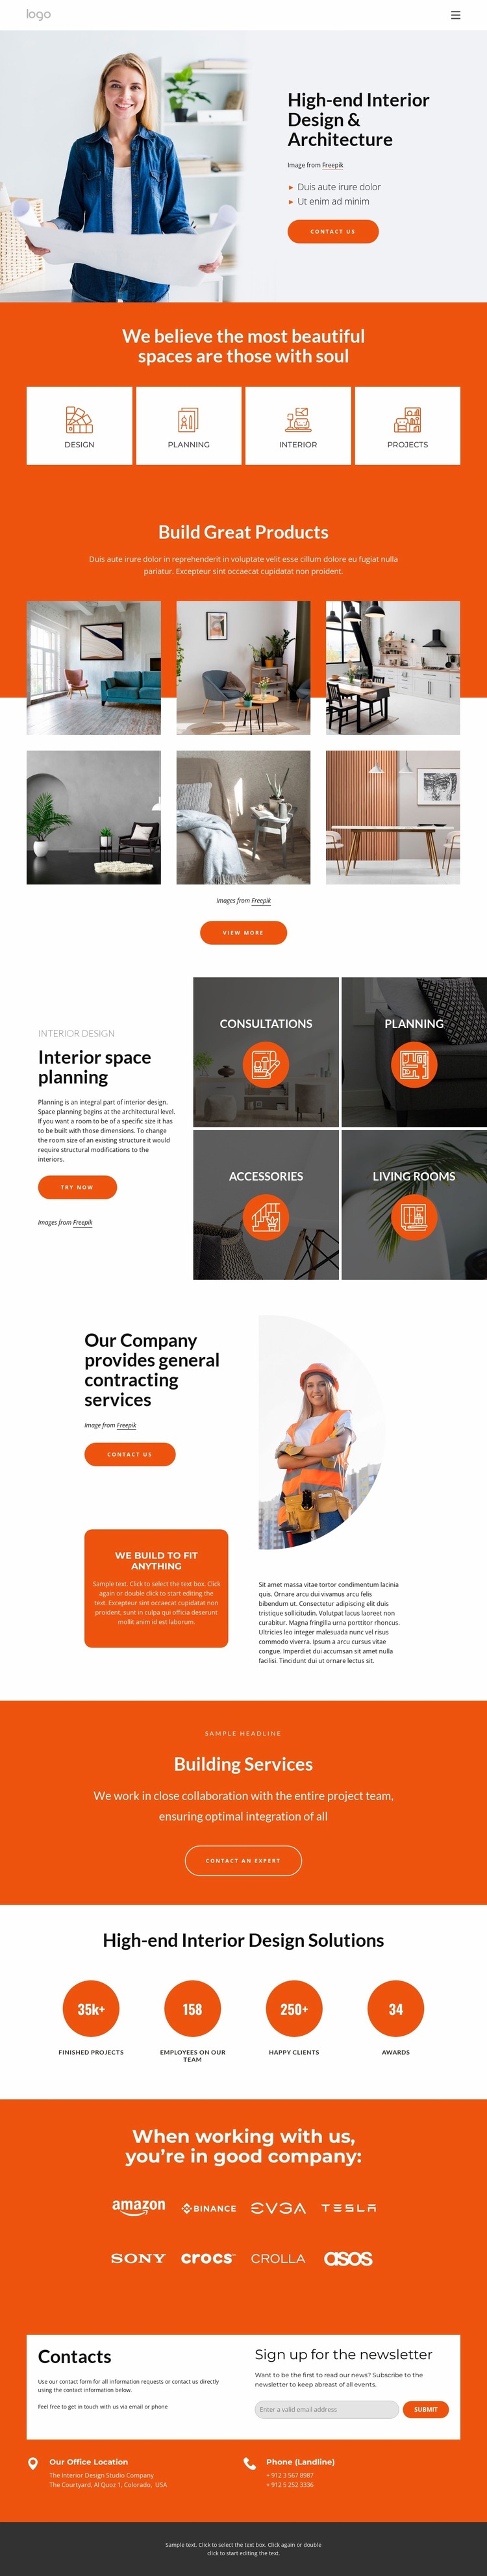 Interior design and architecture studio Website Mockup